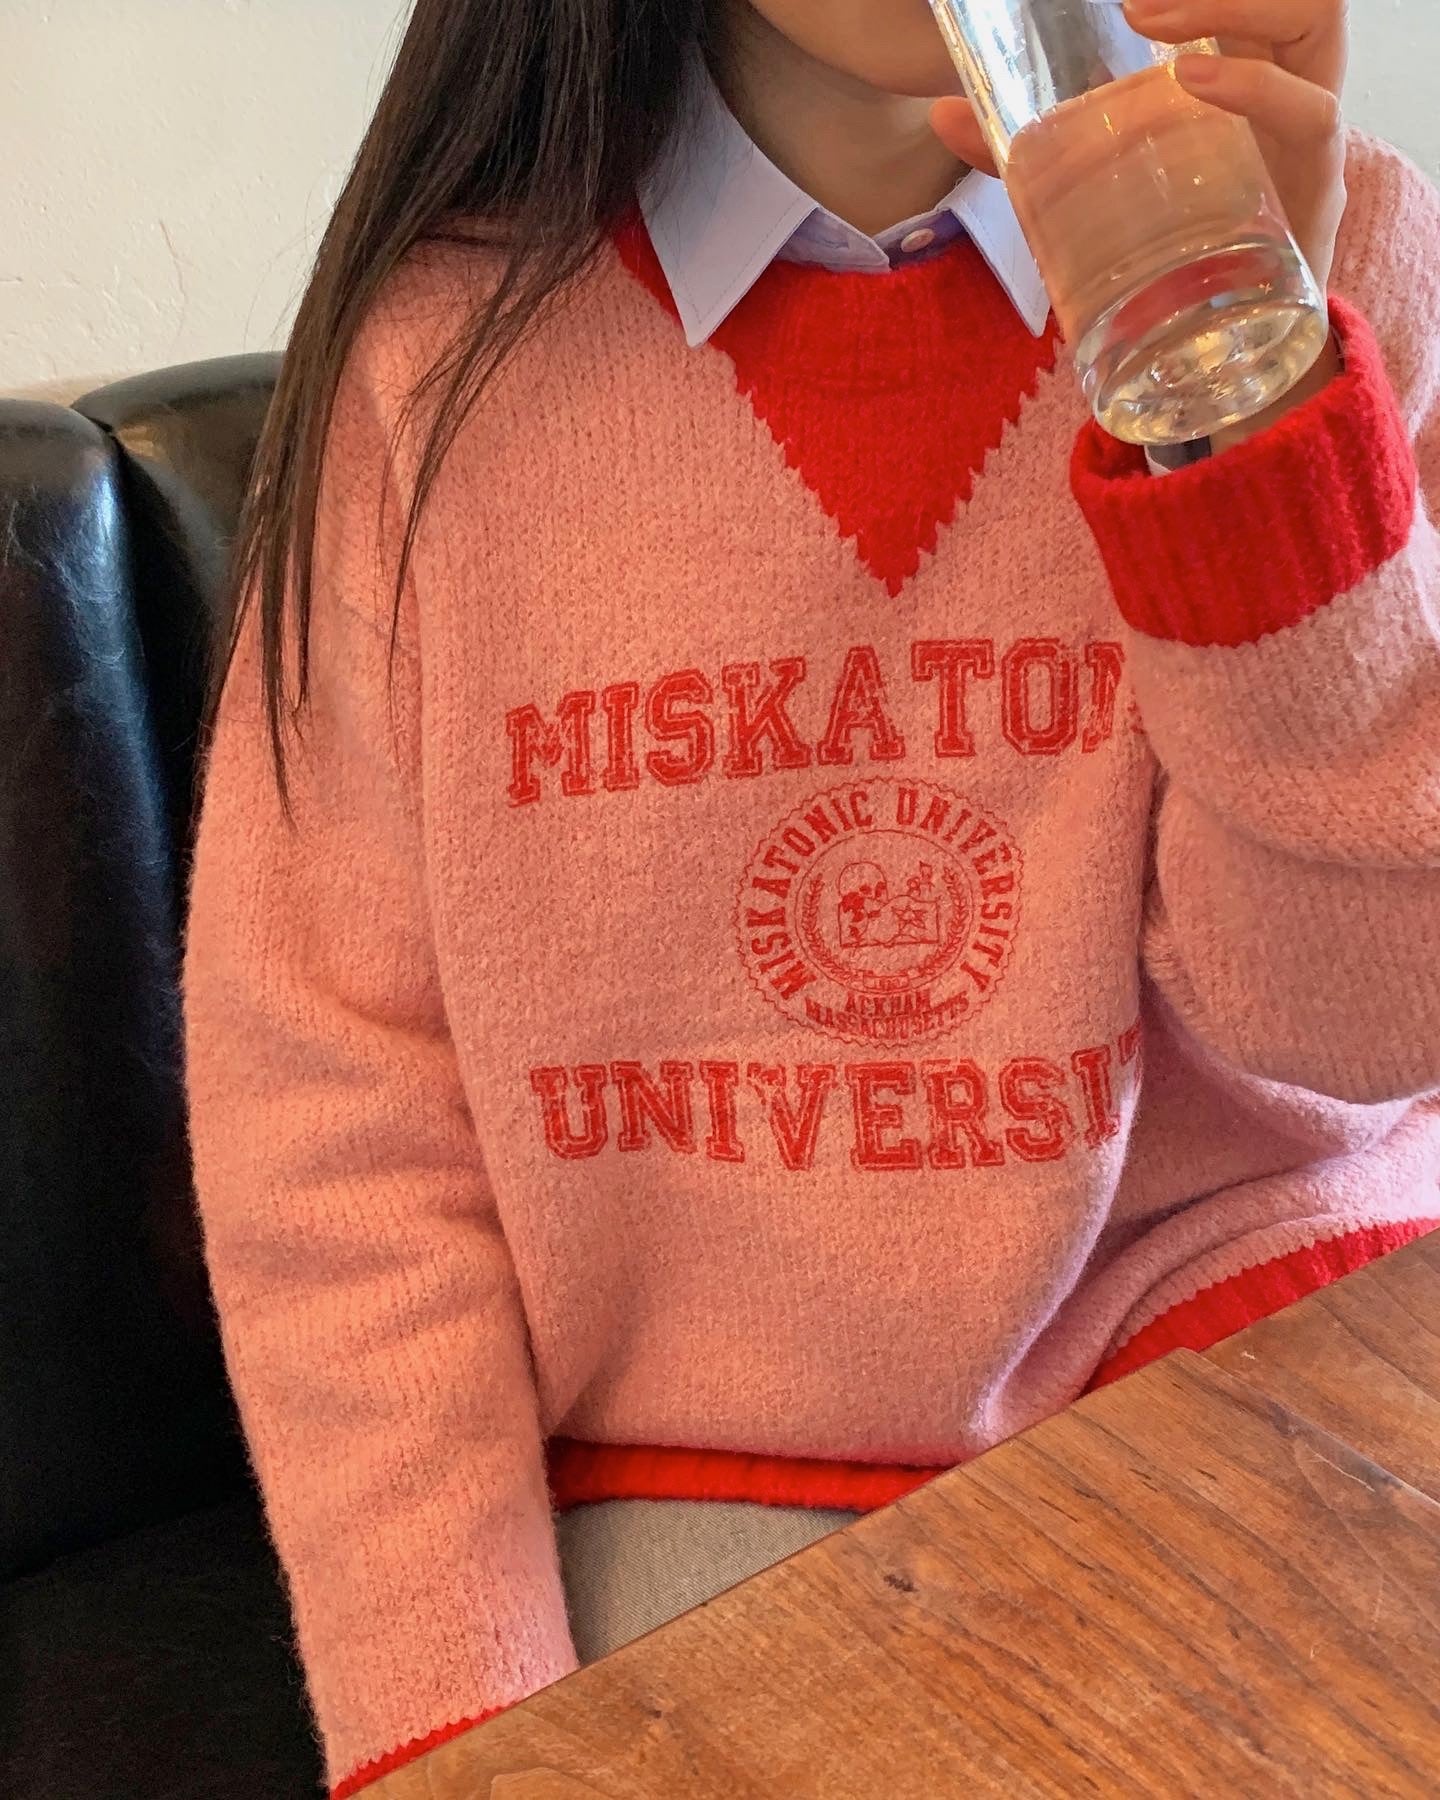 Miskatonic University Sweater